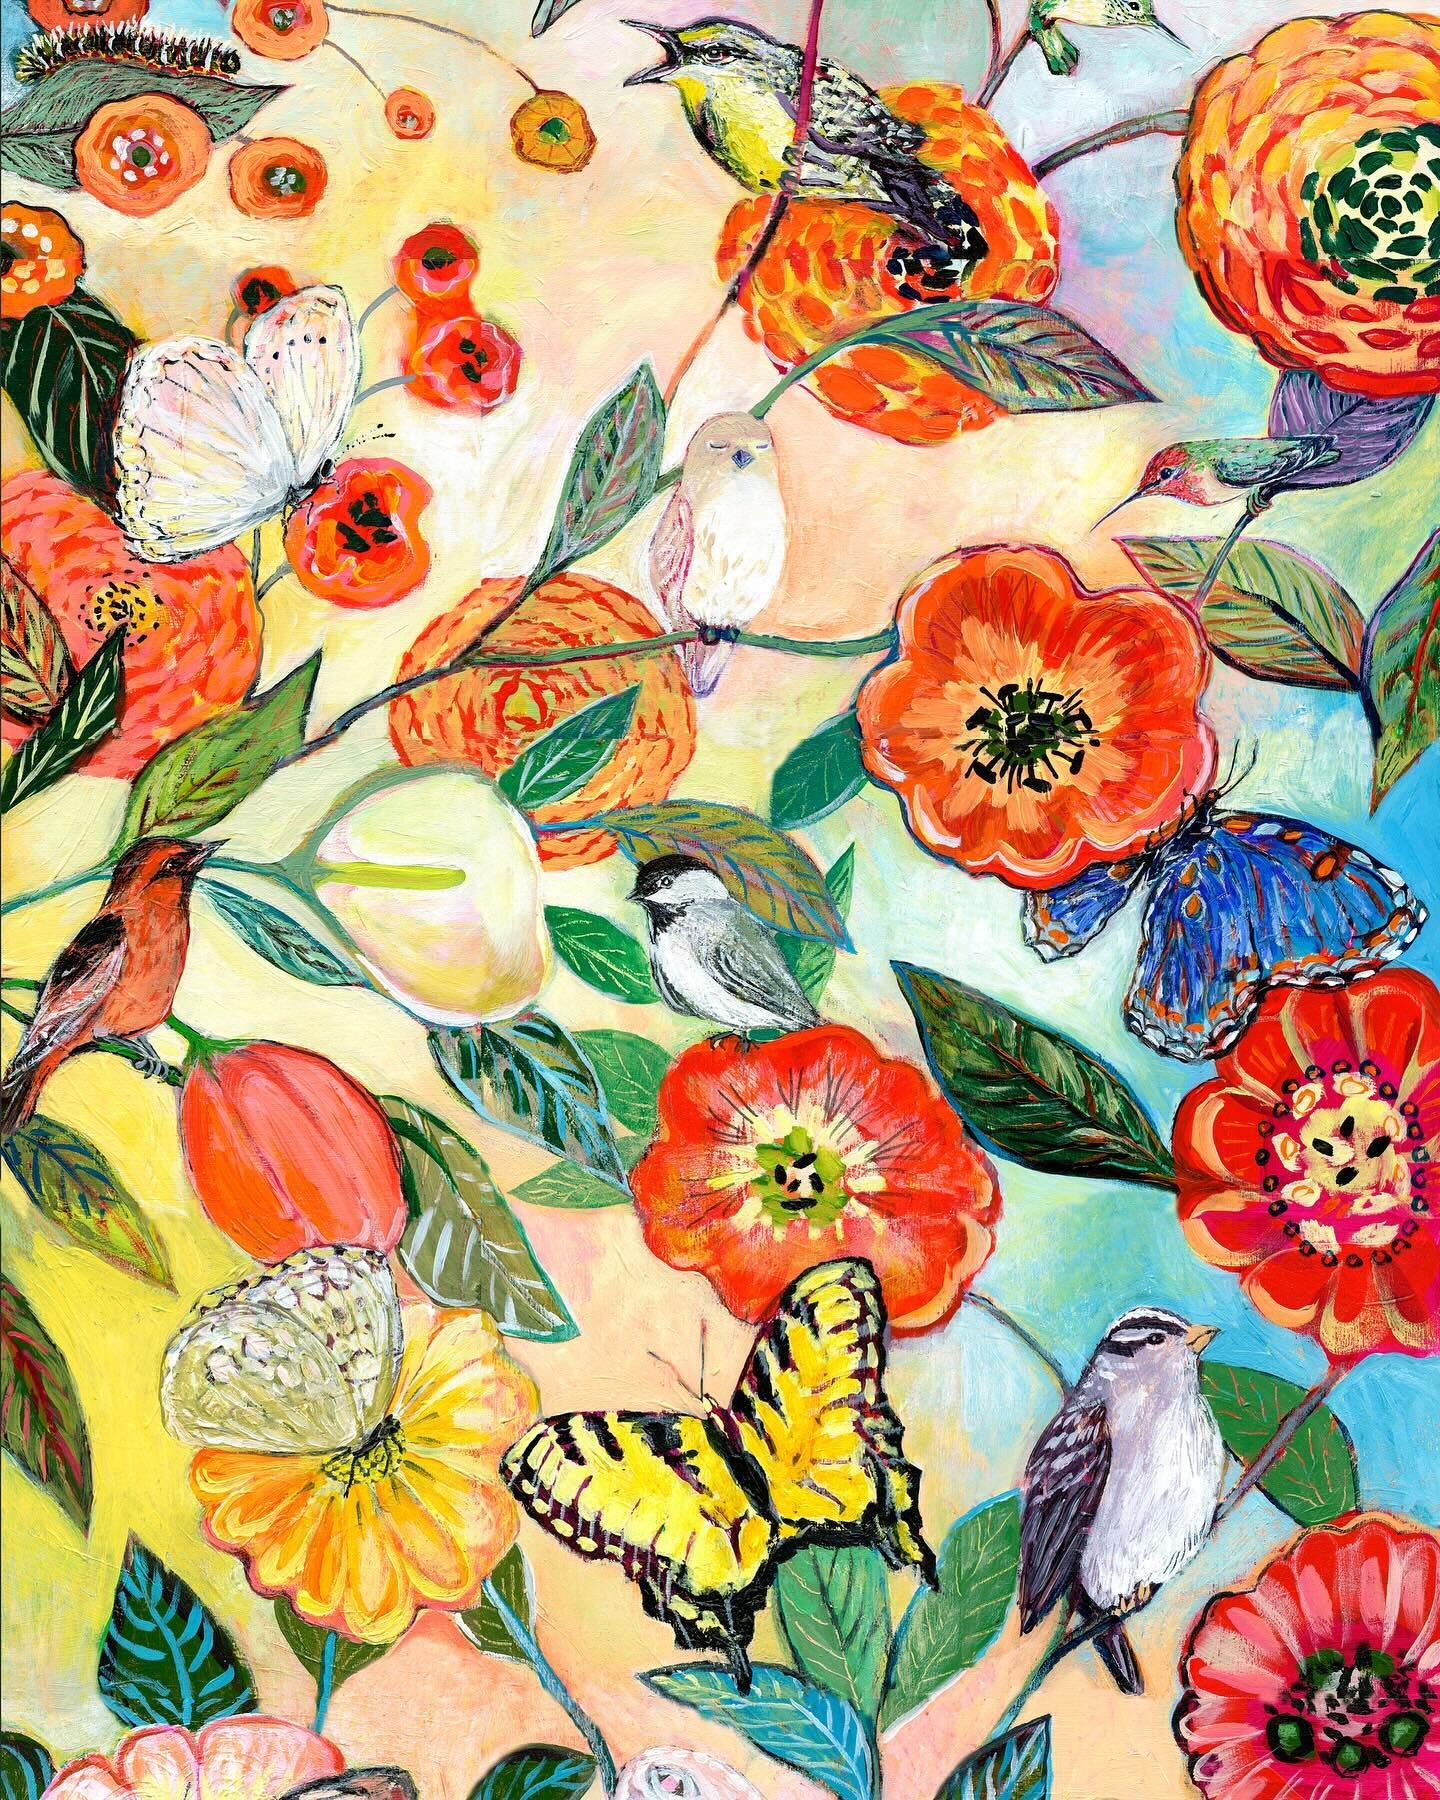 Happy Spring!

#birdsandbutterflies #spring #acrylicpainting #20yearsofpainting